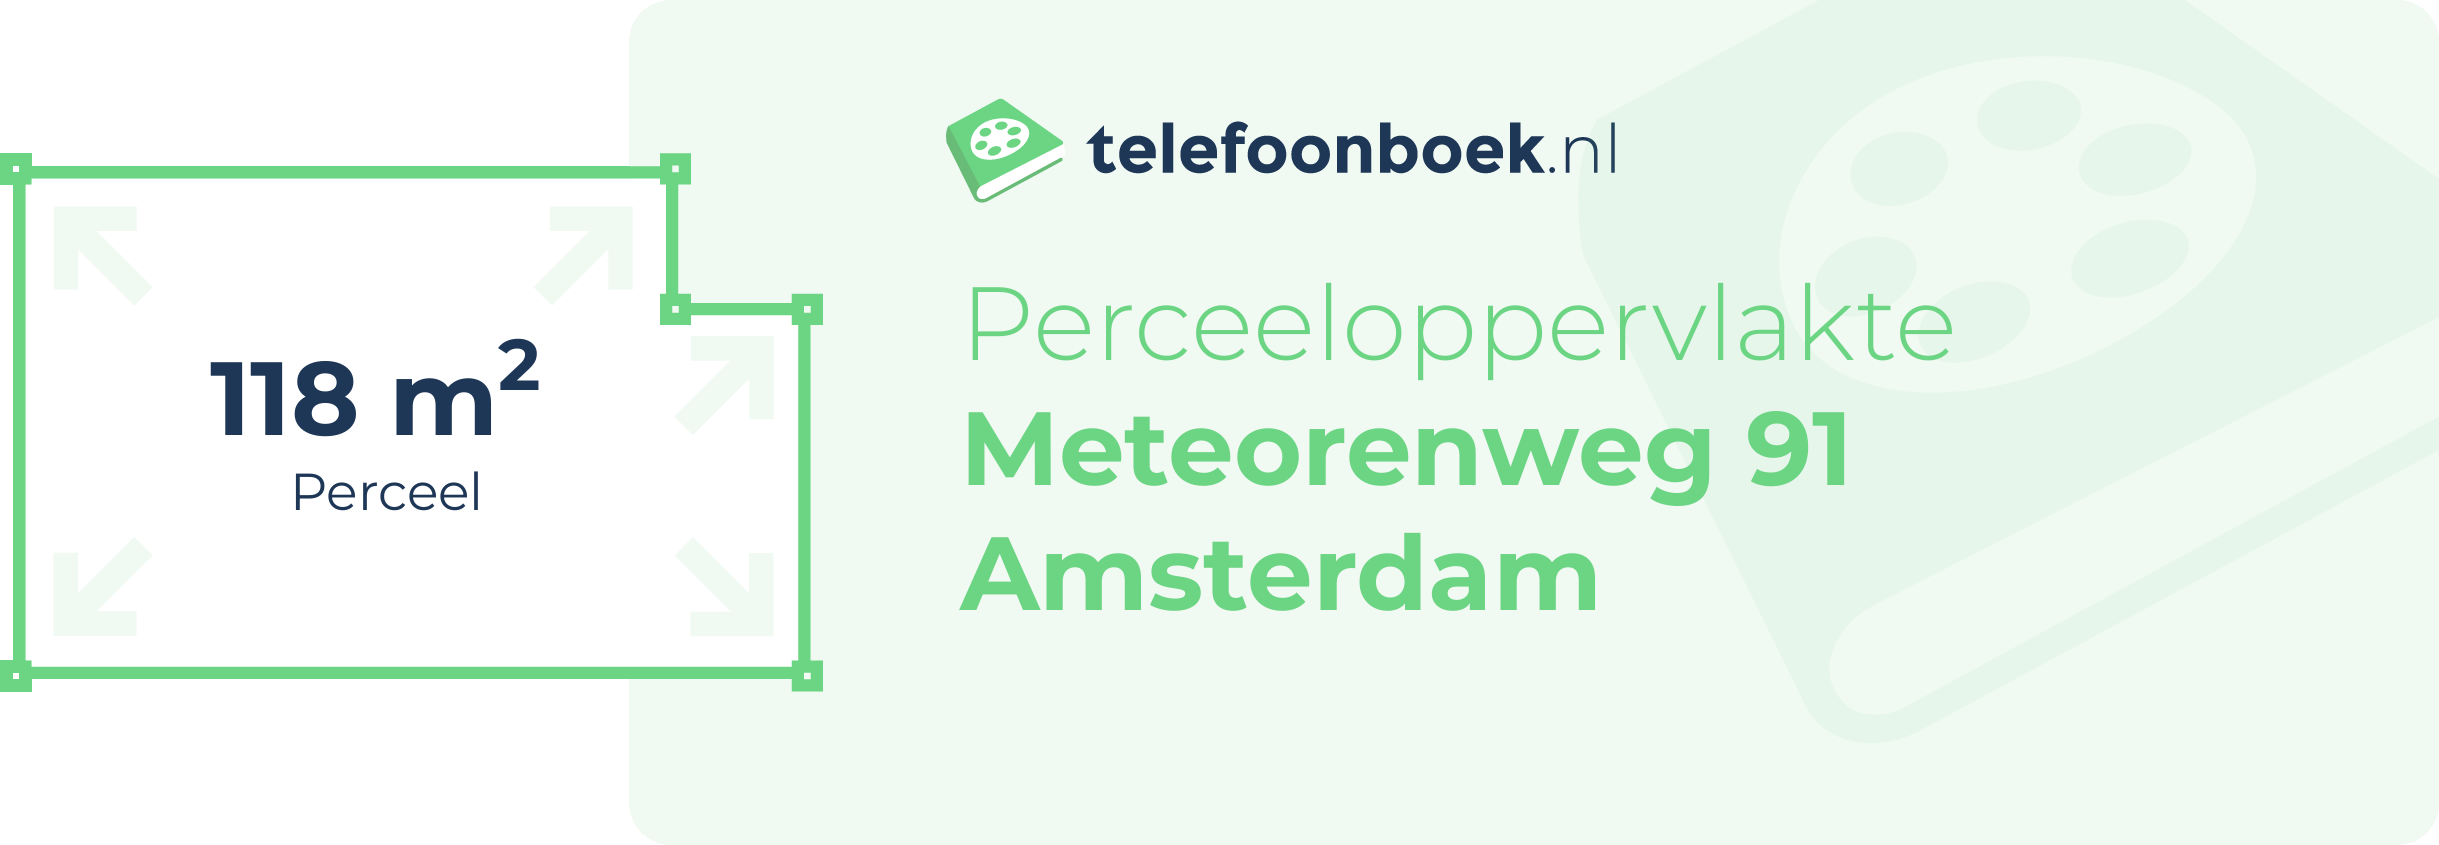 Perceeloppervlakte Meteorenweg 91 Amsterdam